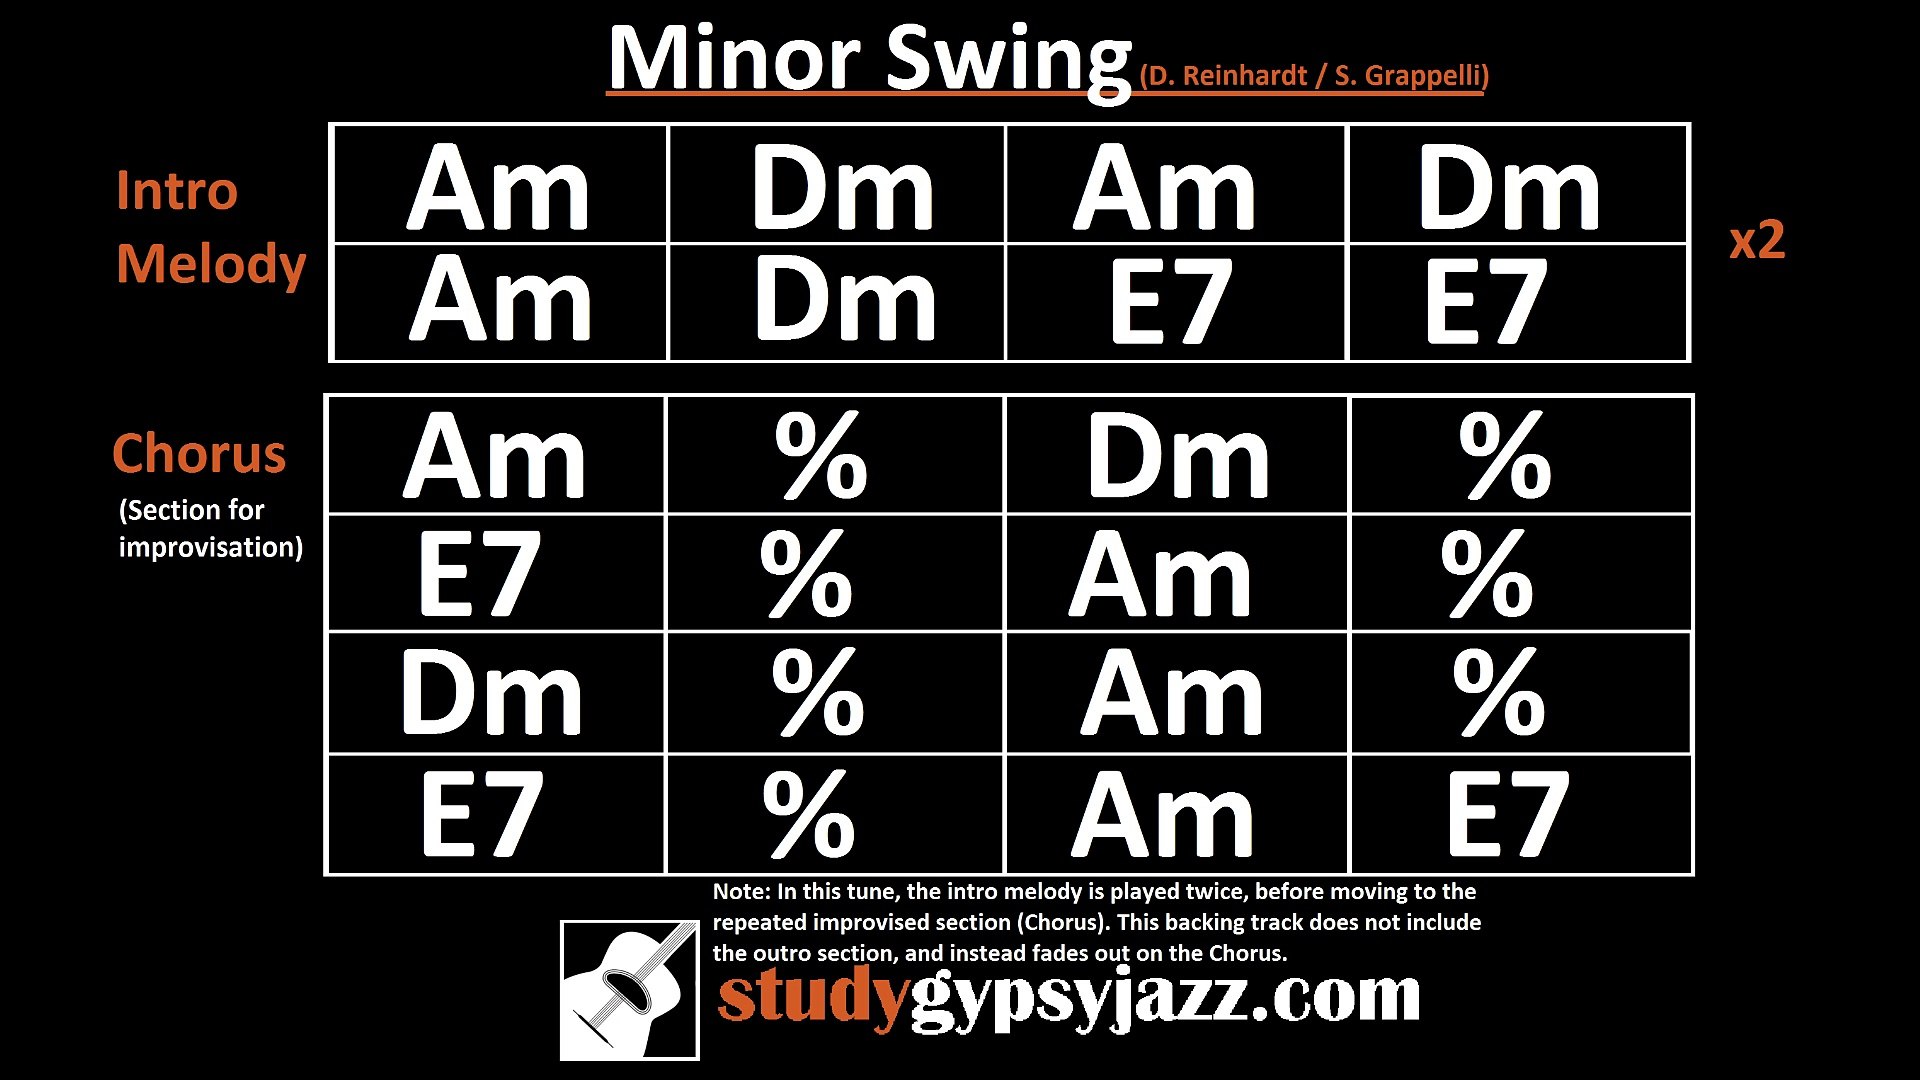 MINOR SWING - Django REINHARDT / Guitare Jazz Manouche / Gypsy